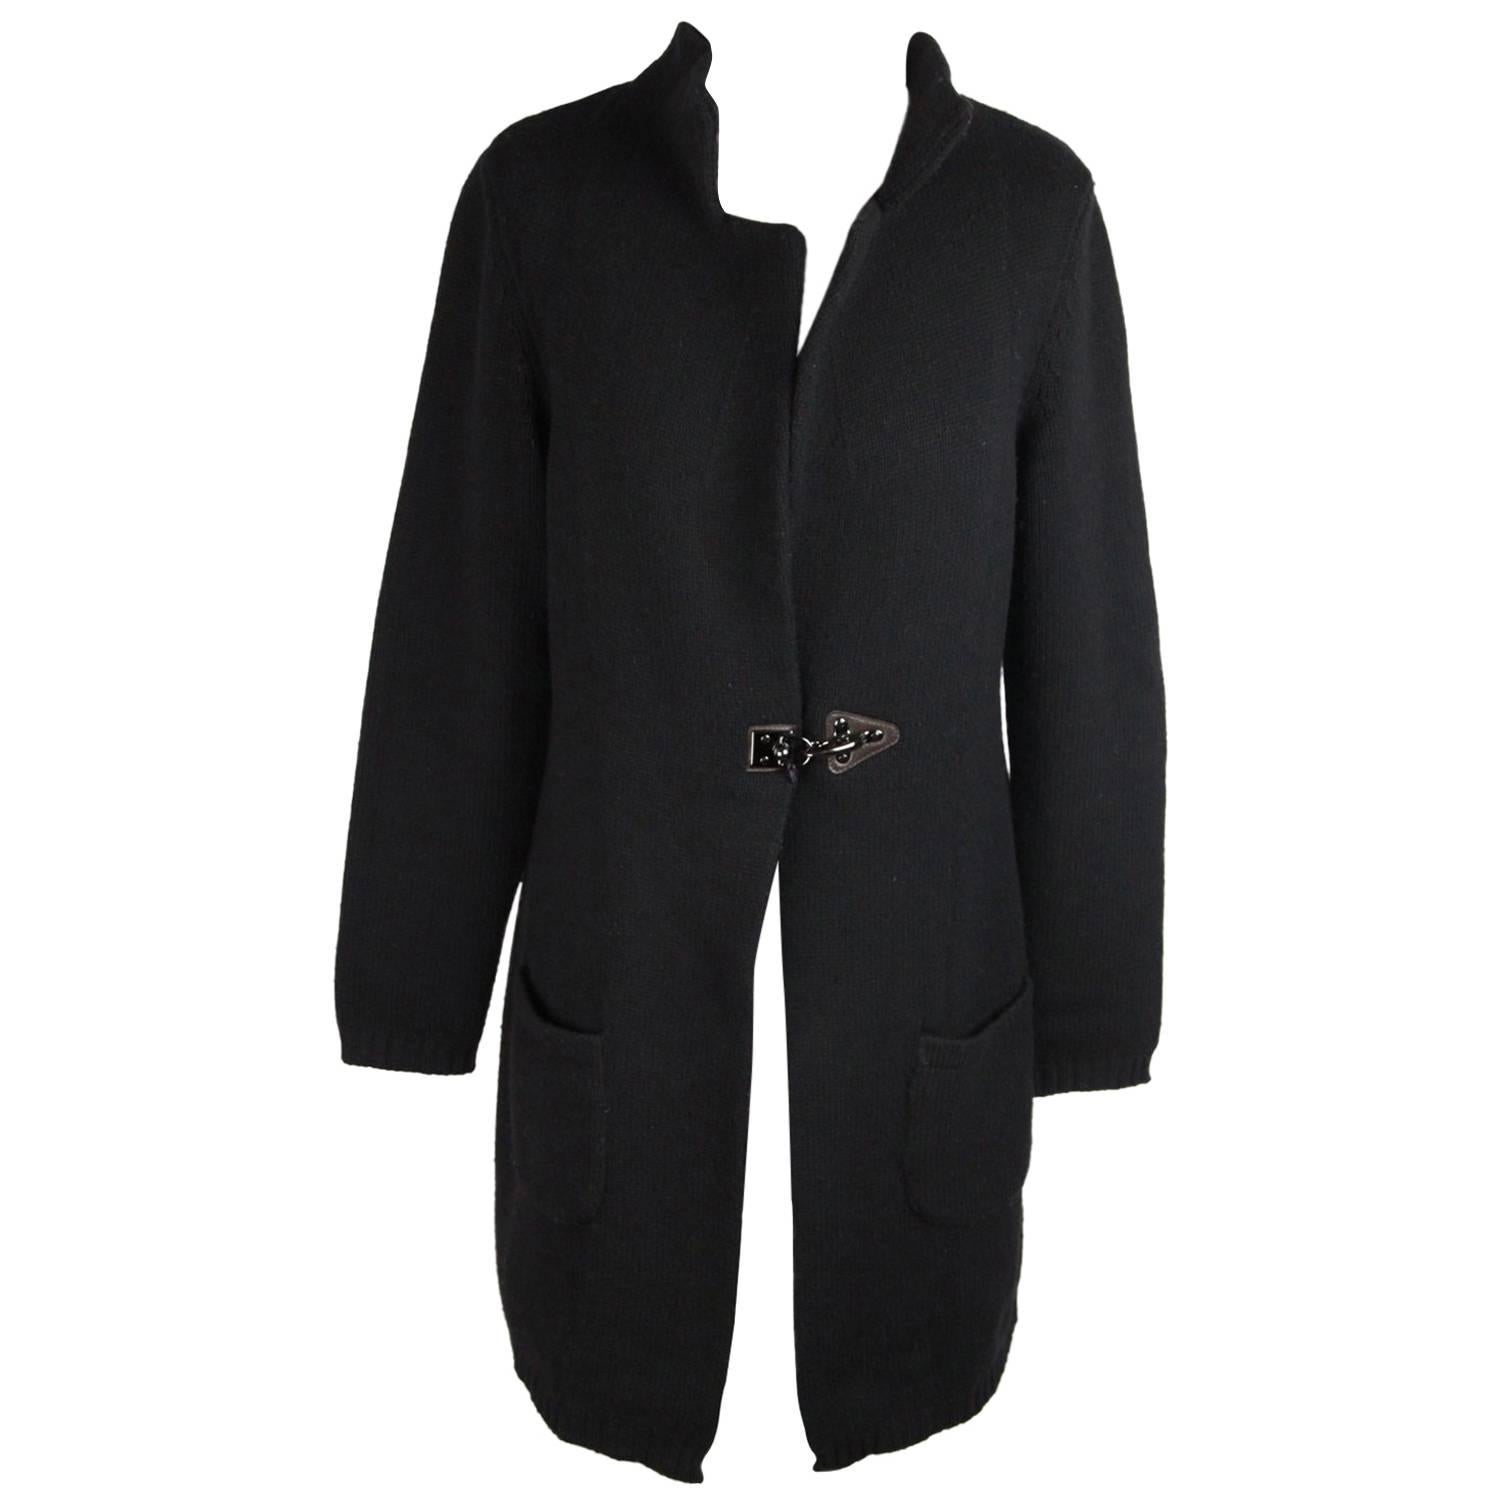 FAY Black Wool & Cashmere CARDIGAN COAT Size M